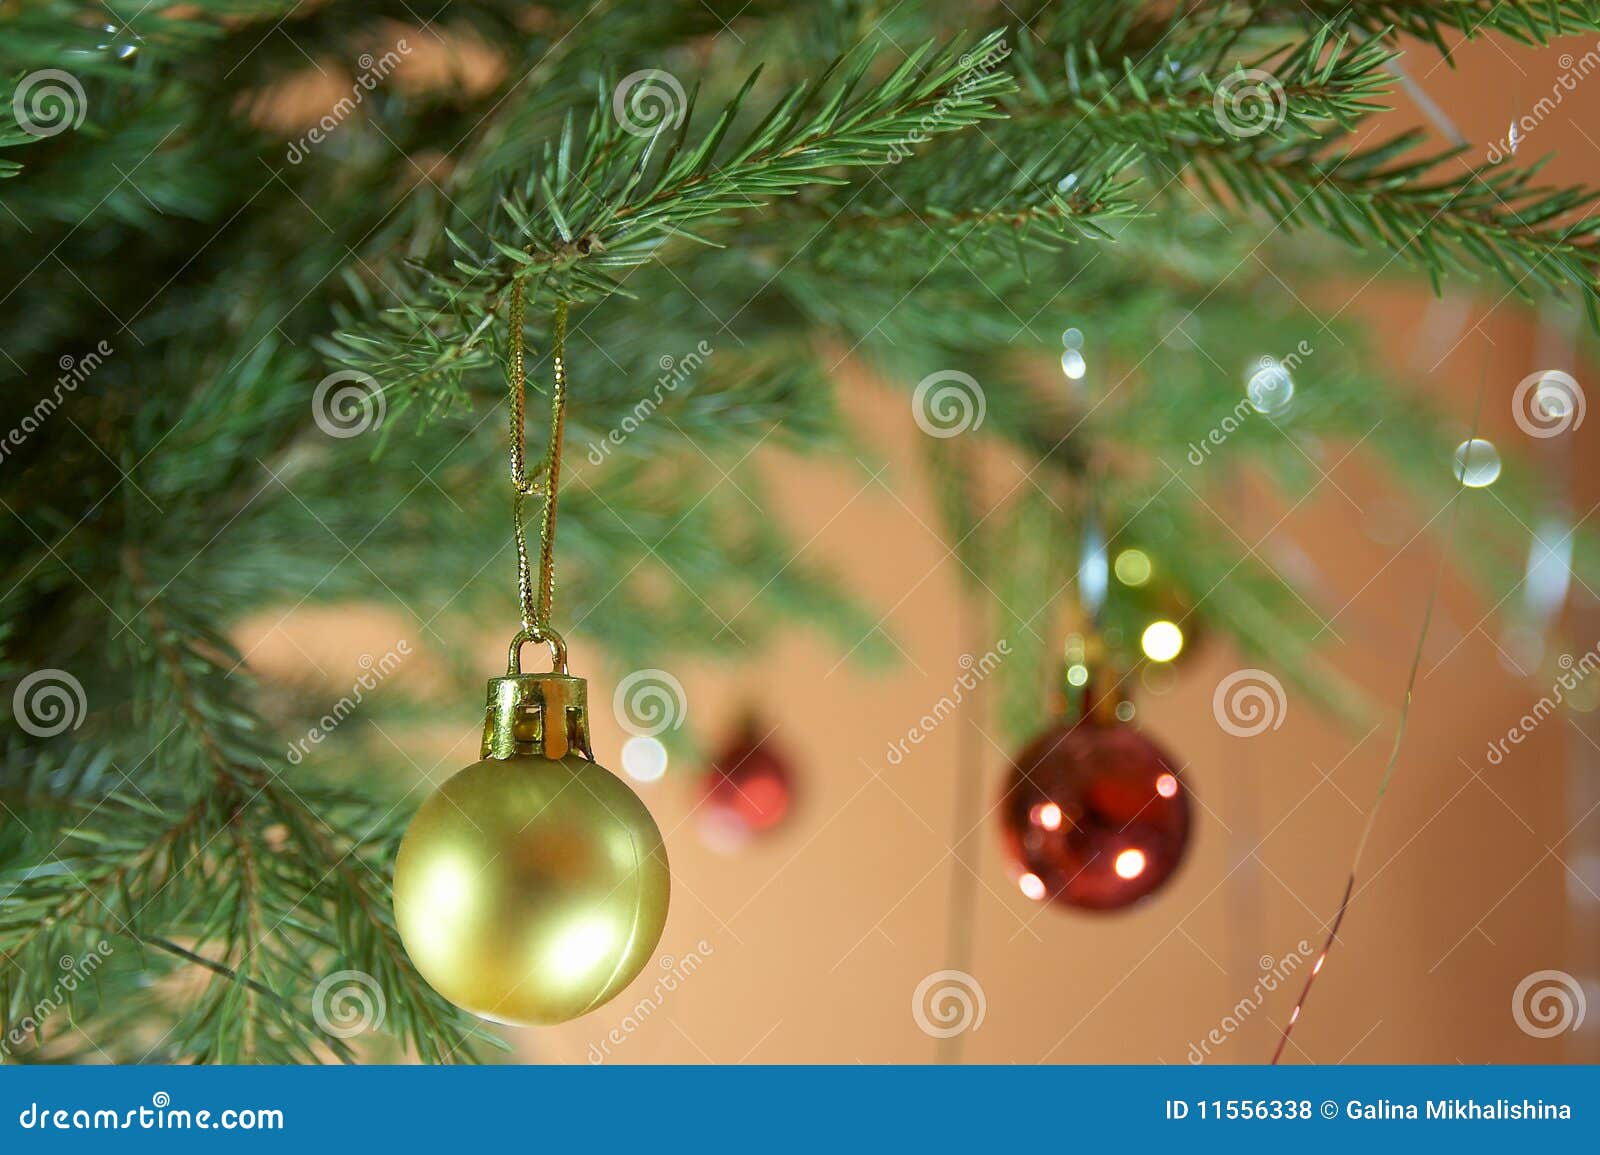 New Year s spheres stock photo. Image of seasonal, decorative - 11556338